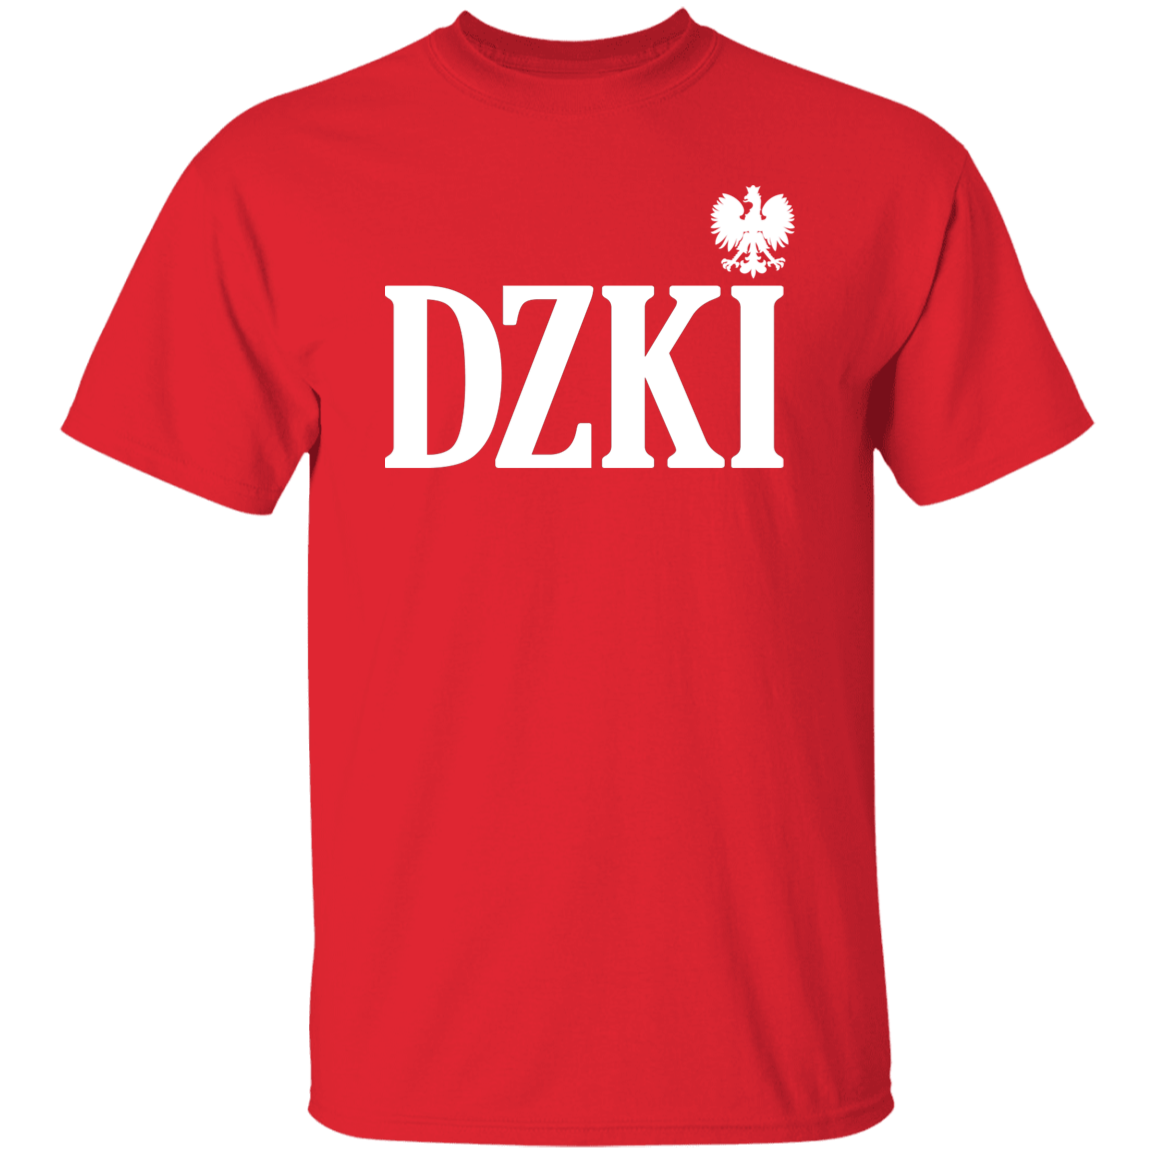 DZKI Polish Surname Ending Apparel CustomCat G500 5.3 oz. T-Shirt Red S